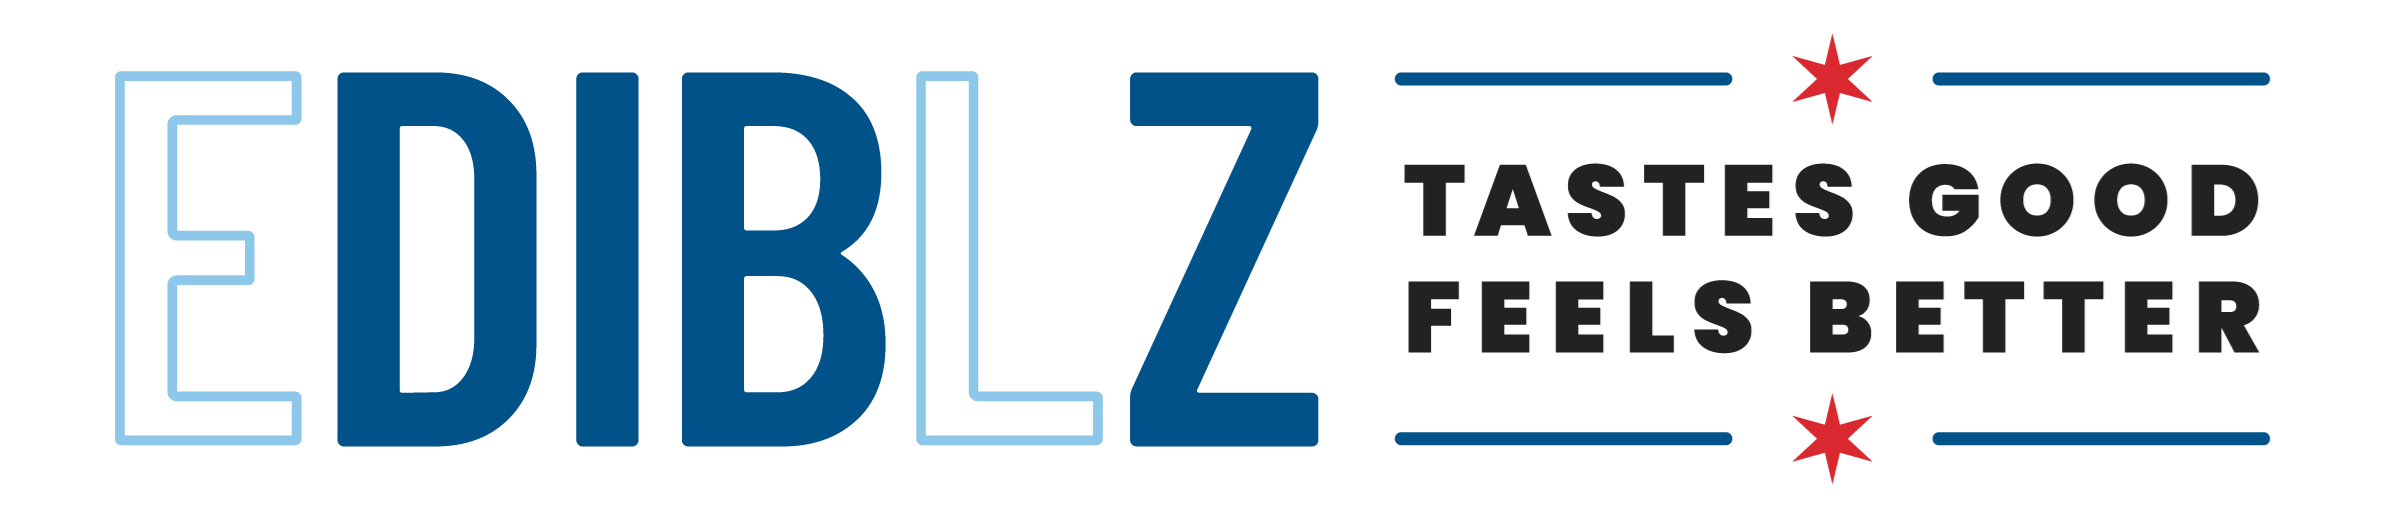 DIBZ Cannabis Brand Logo